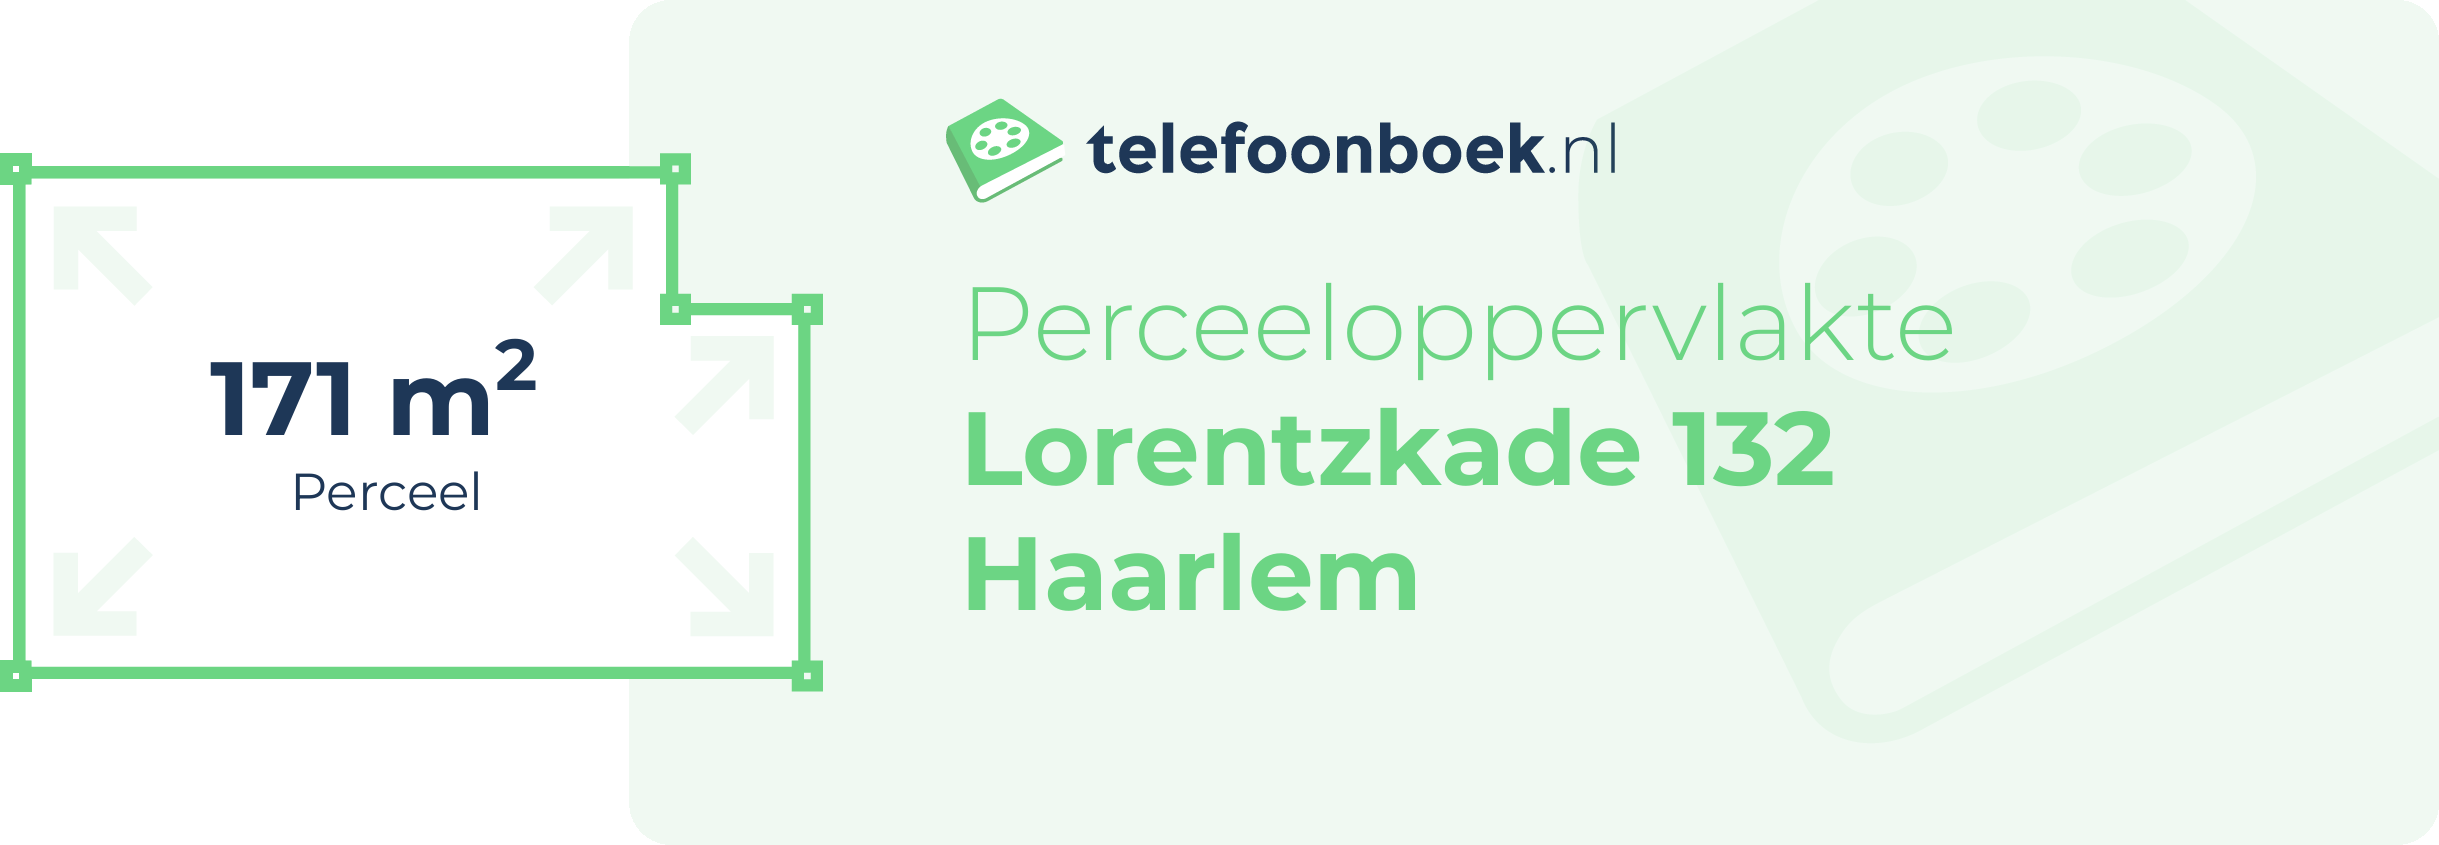 Perceeloppervlakte Lorentzkade 132 Haarlem